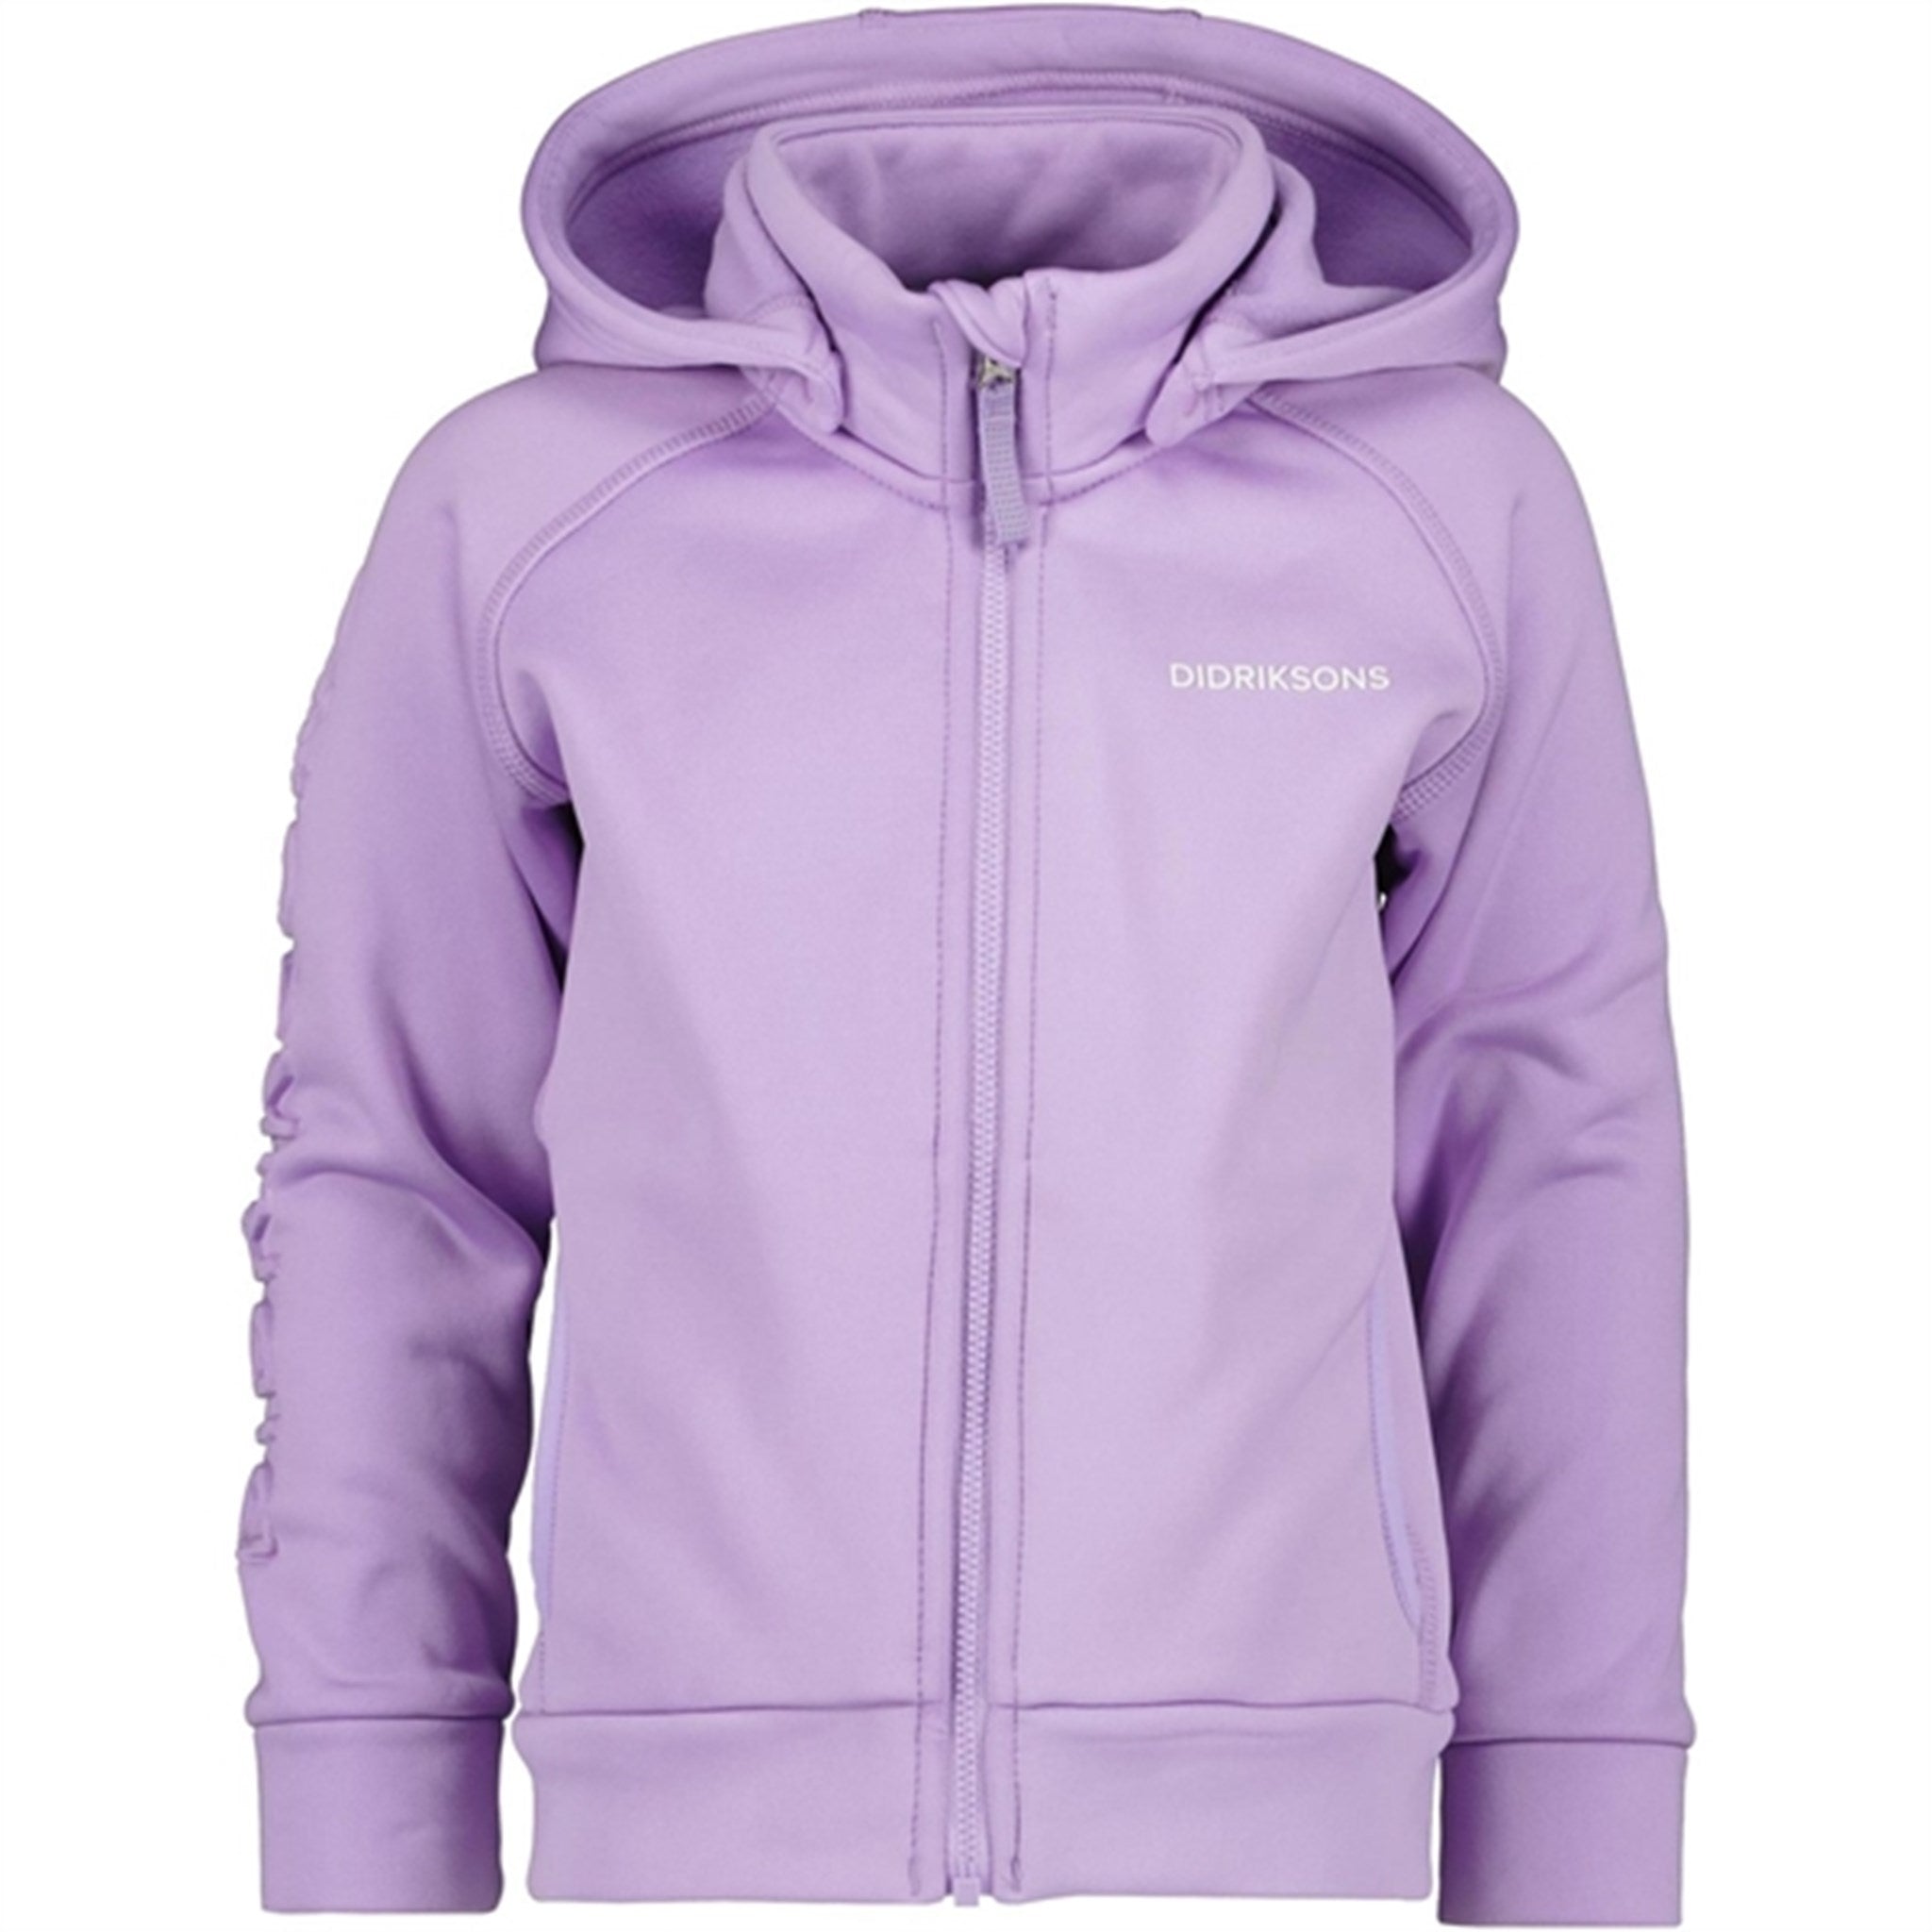 Didriksons Corinv Digital Purple Sweatshirt with Zipper